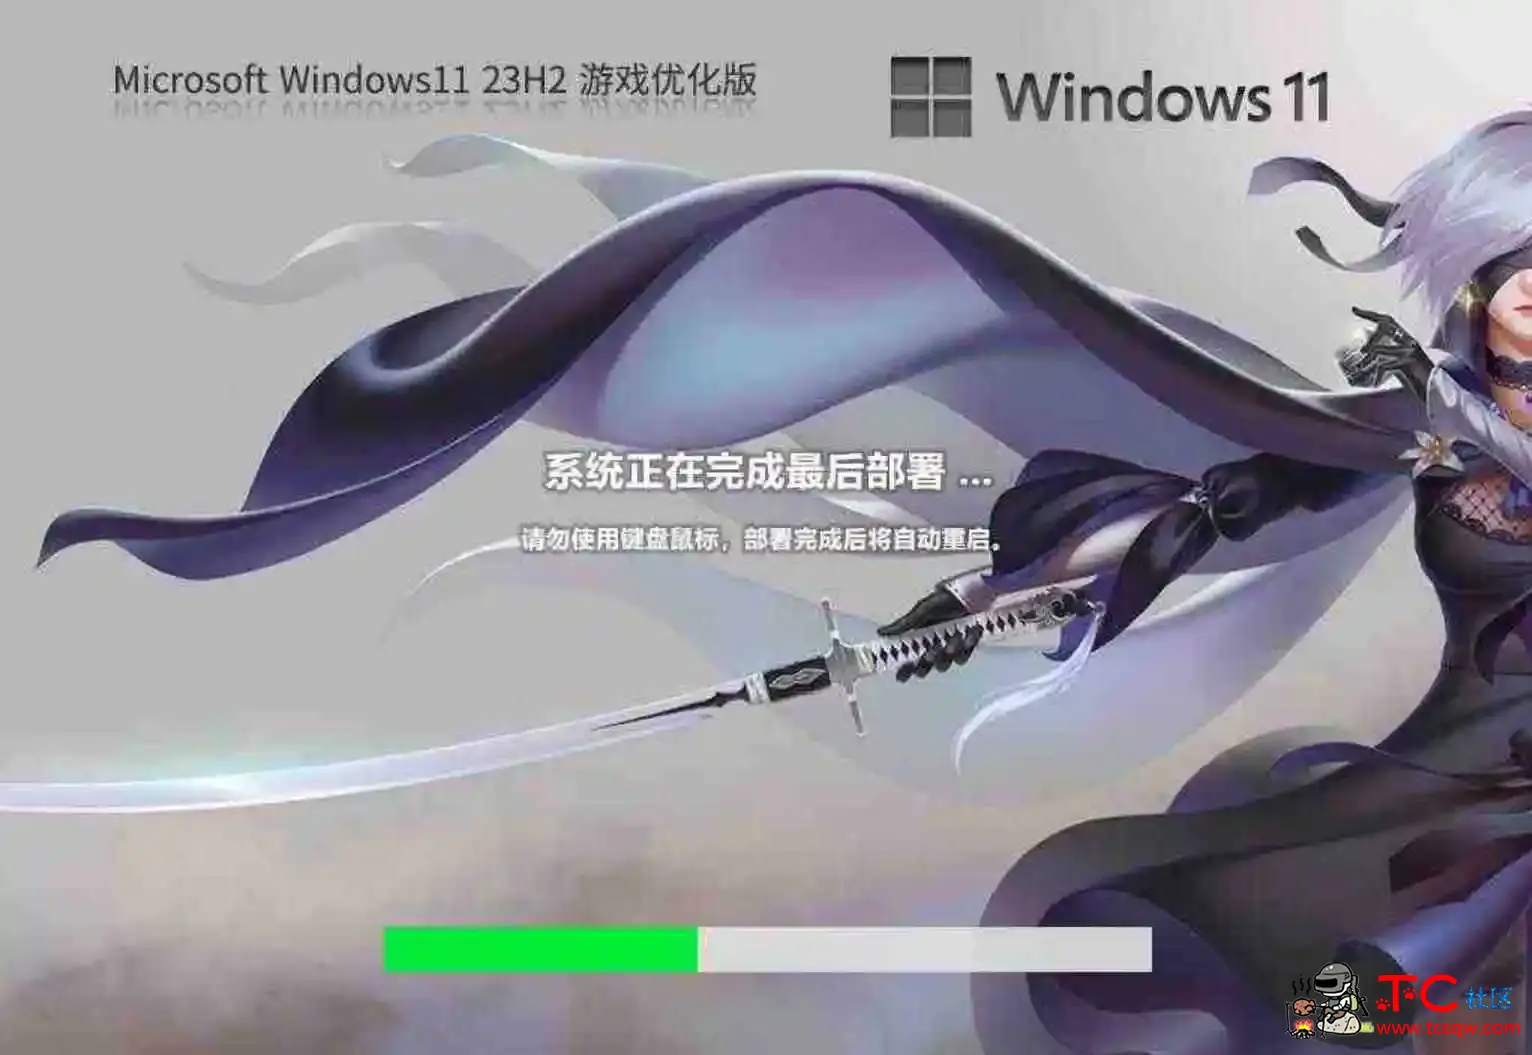 Windows11 23H2 游戏定制优化版为玩游戏而存在 TC辅助网www.tcsq1.com7020